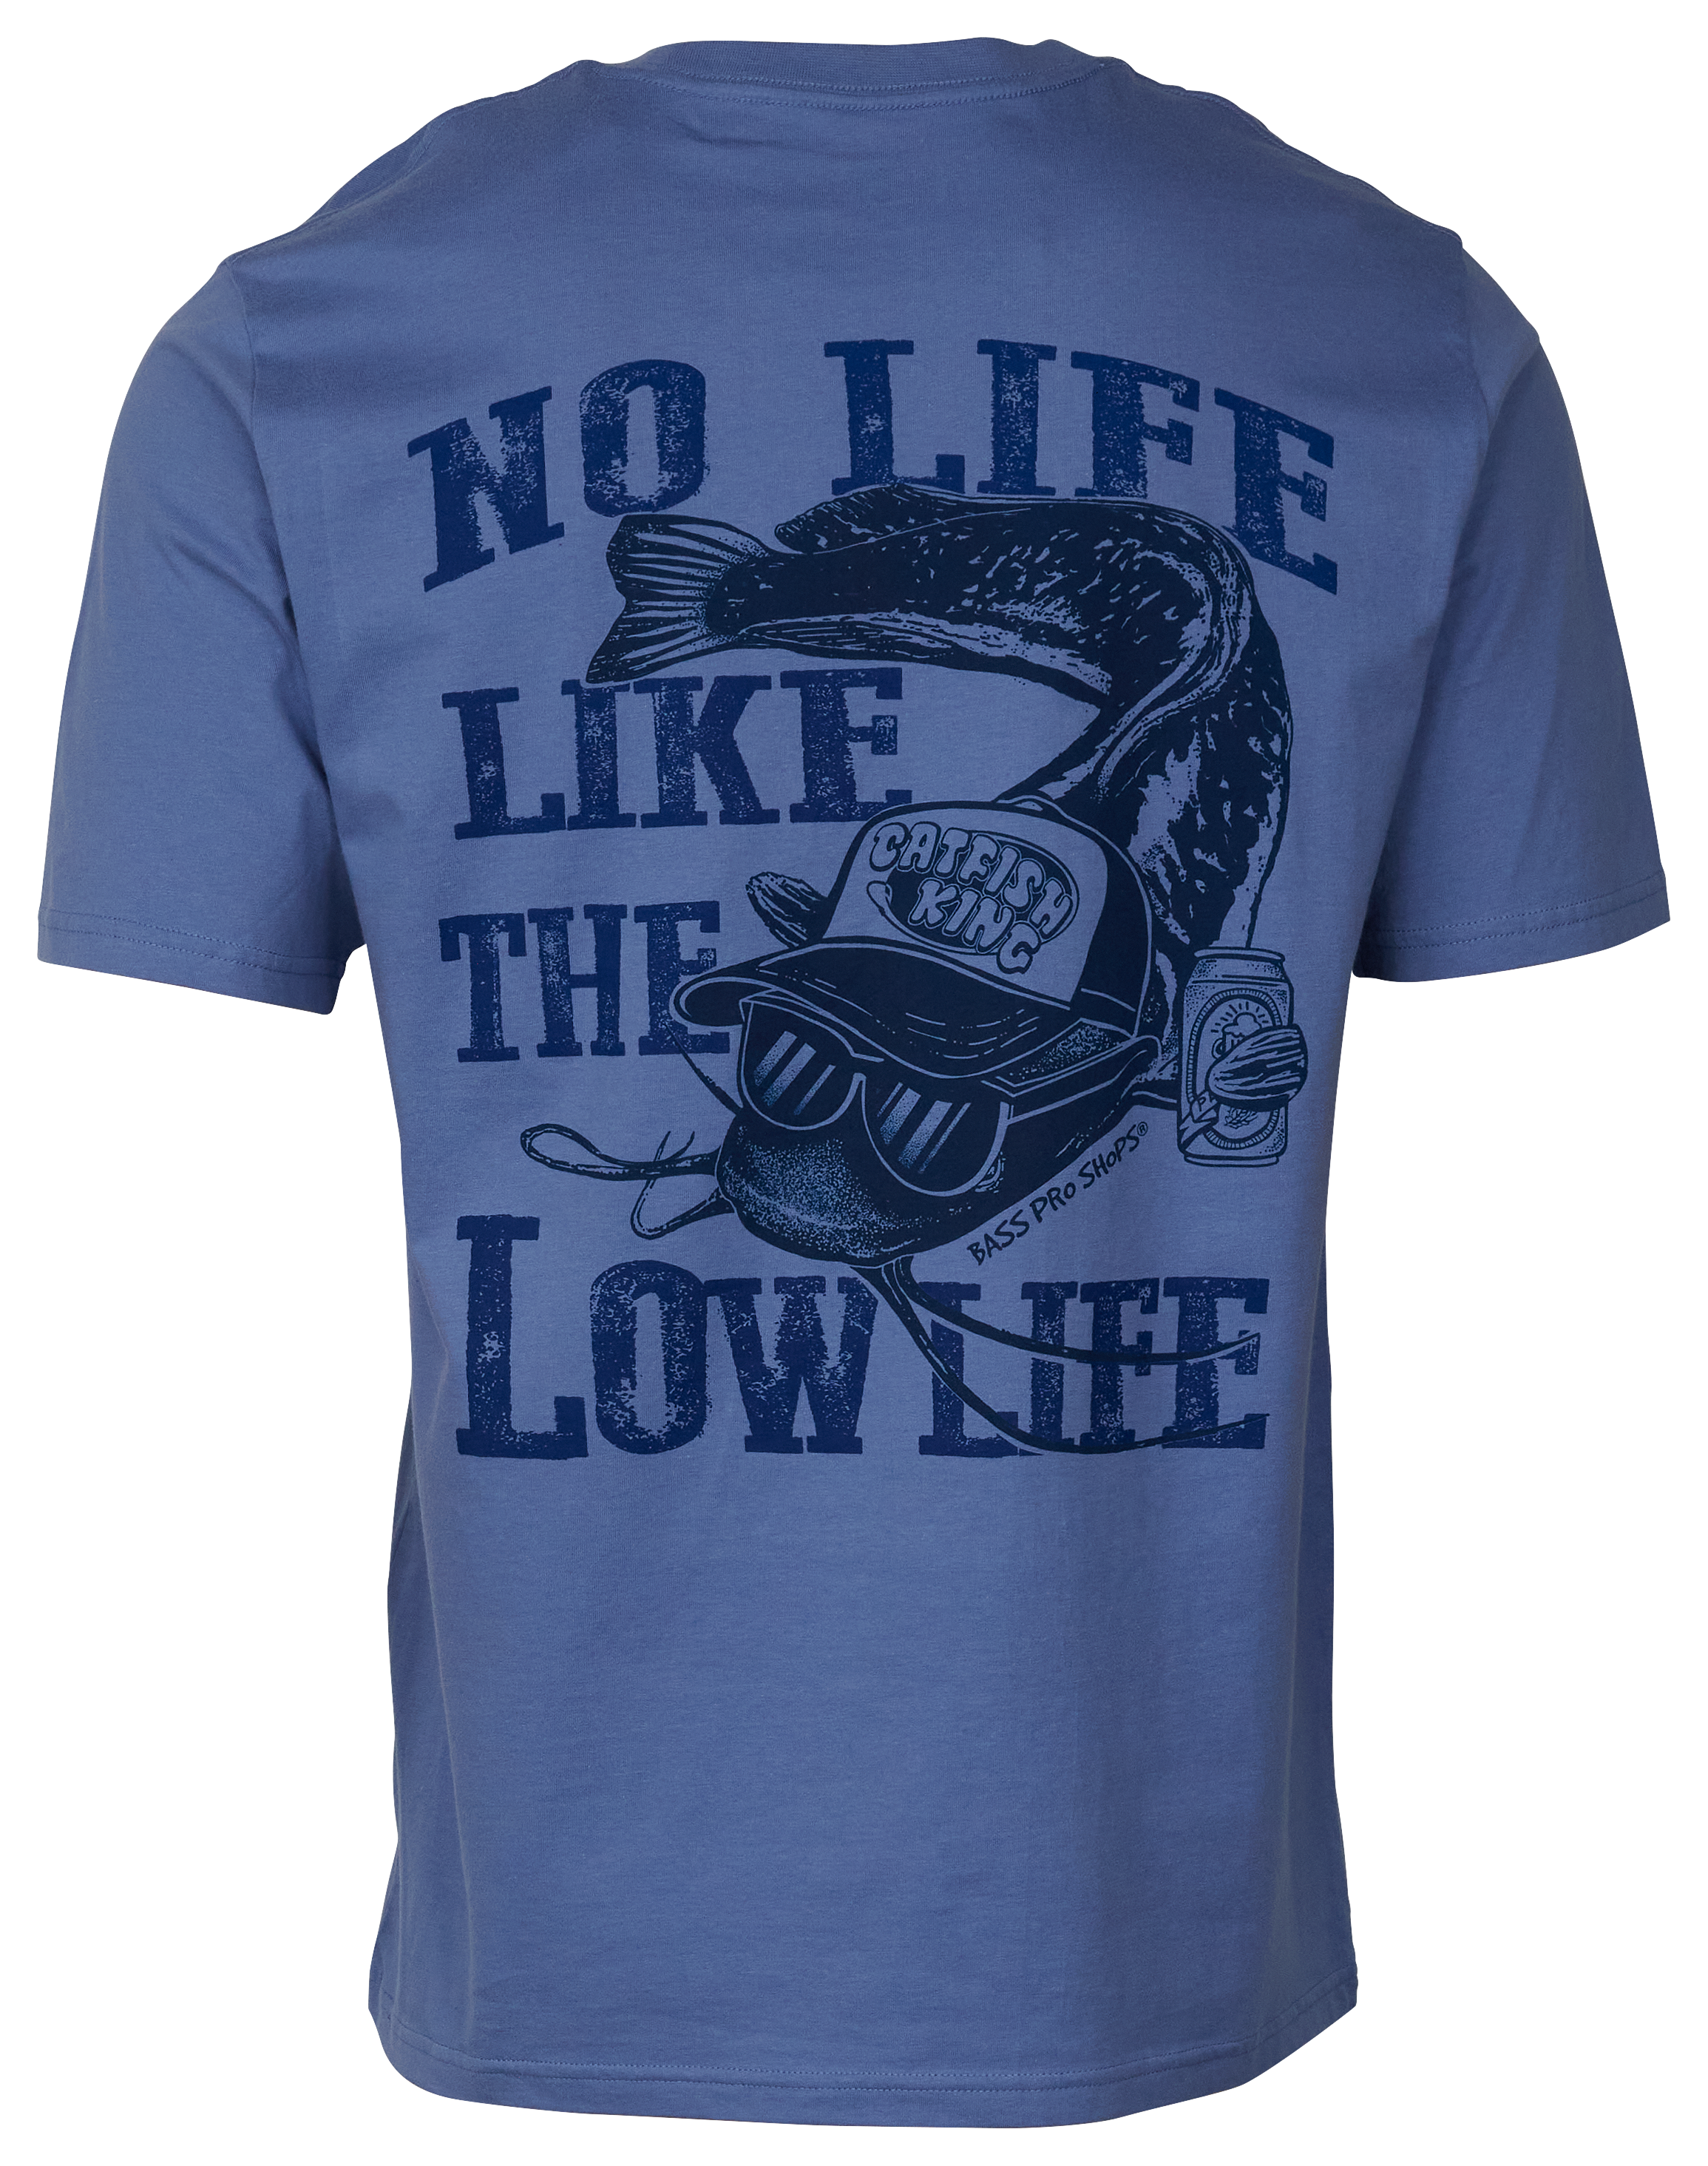 Bass Pro Shops Low Life Short-Sleeve T-Shirt for Men - Infinity - 2XL